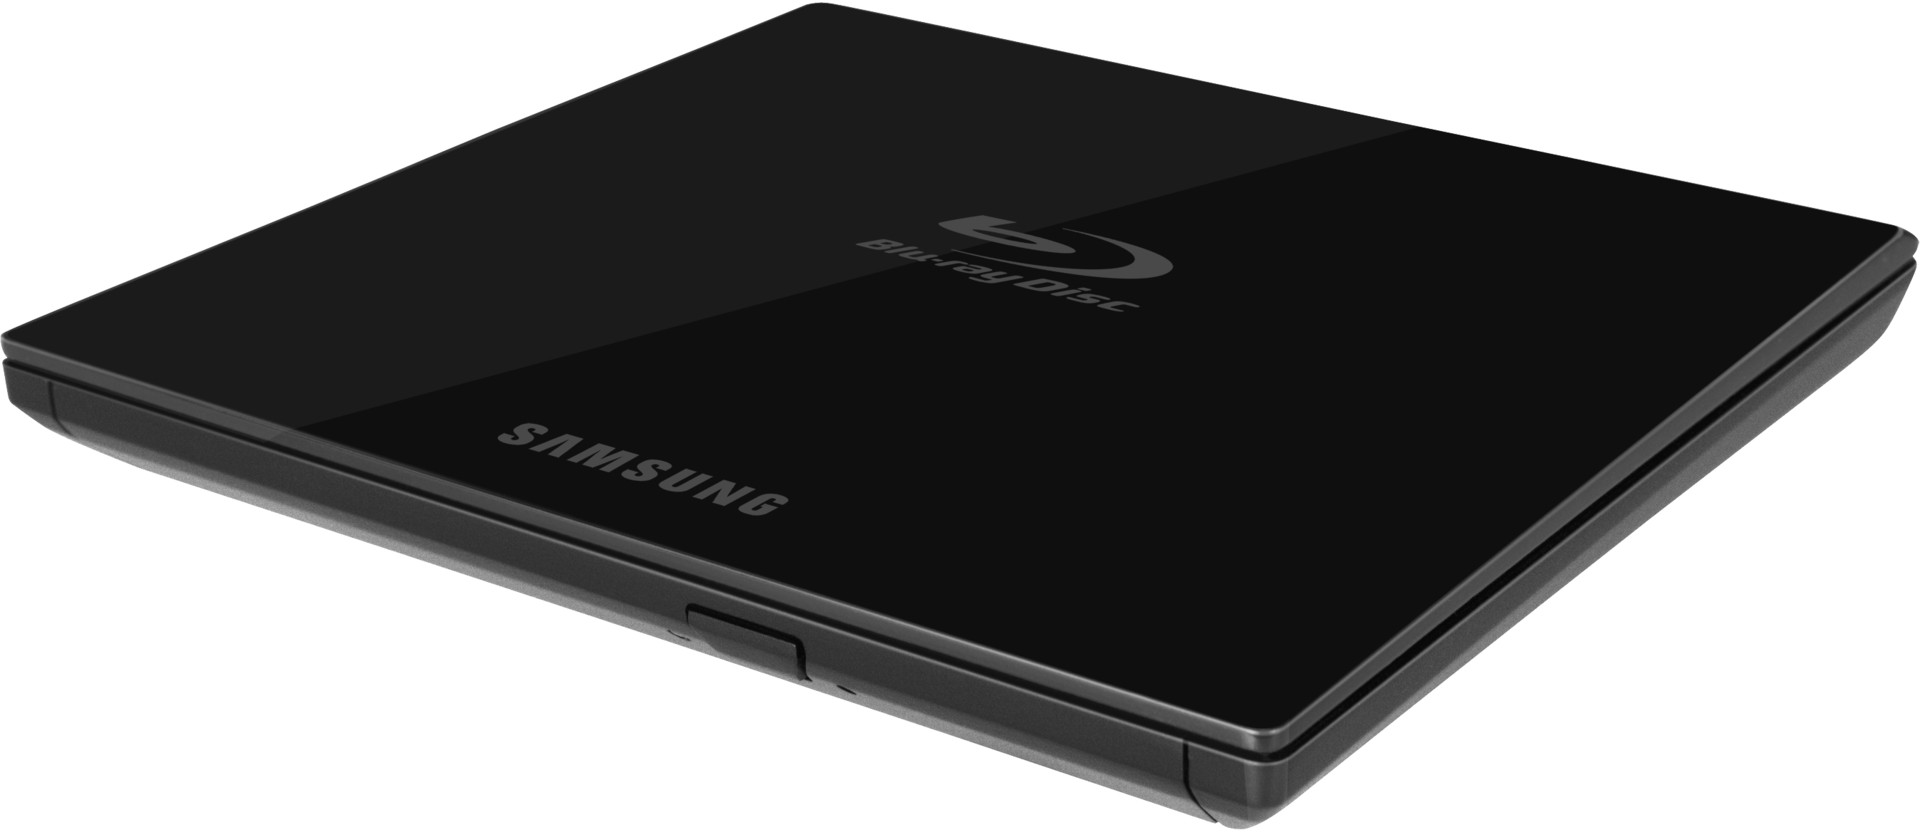 Samsung Slim Portable Blu-ray/DVD Writer: $64 shipped (Reg. $90)